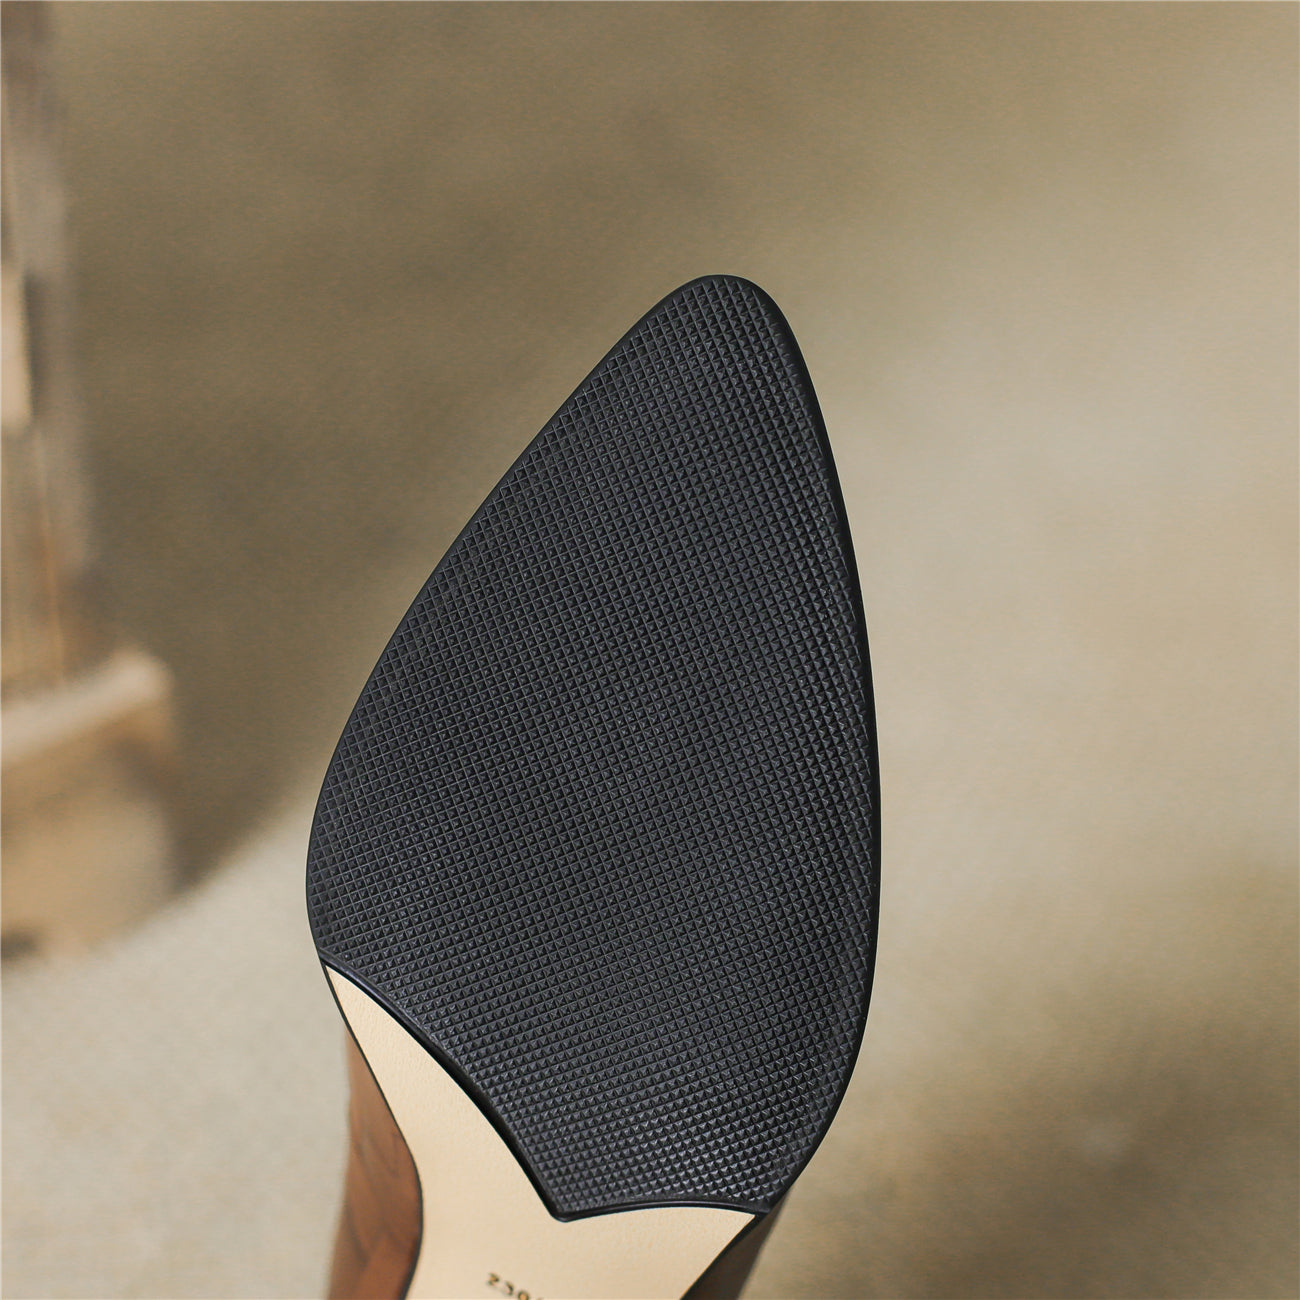 TinaCus Women's Genuine Leather Handmade Mid Heel  Zip Up Ankle Boots